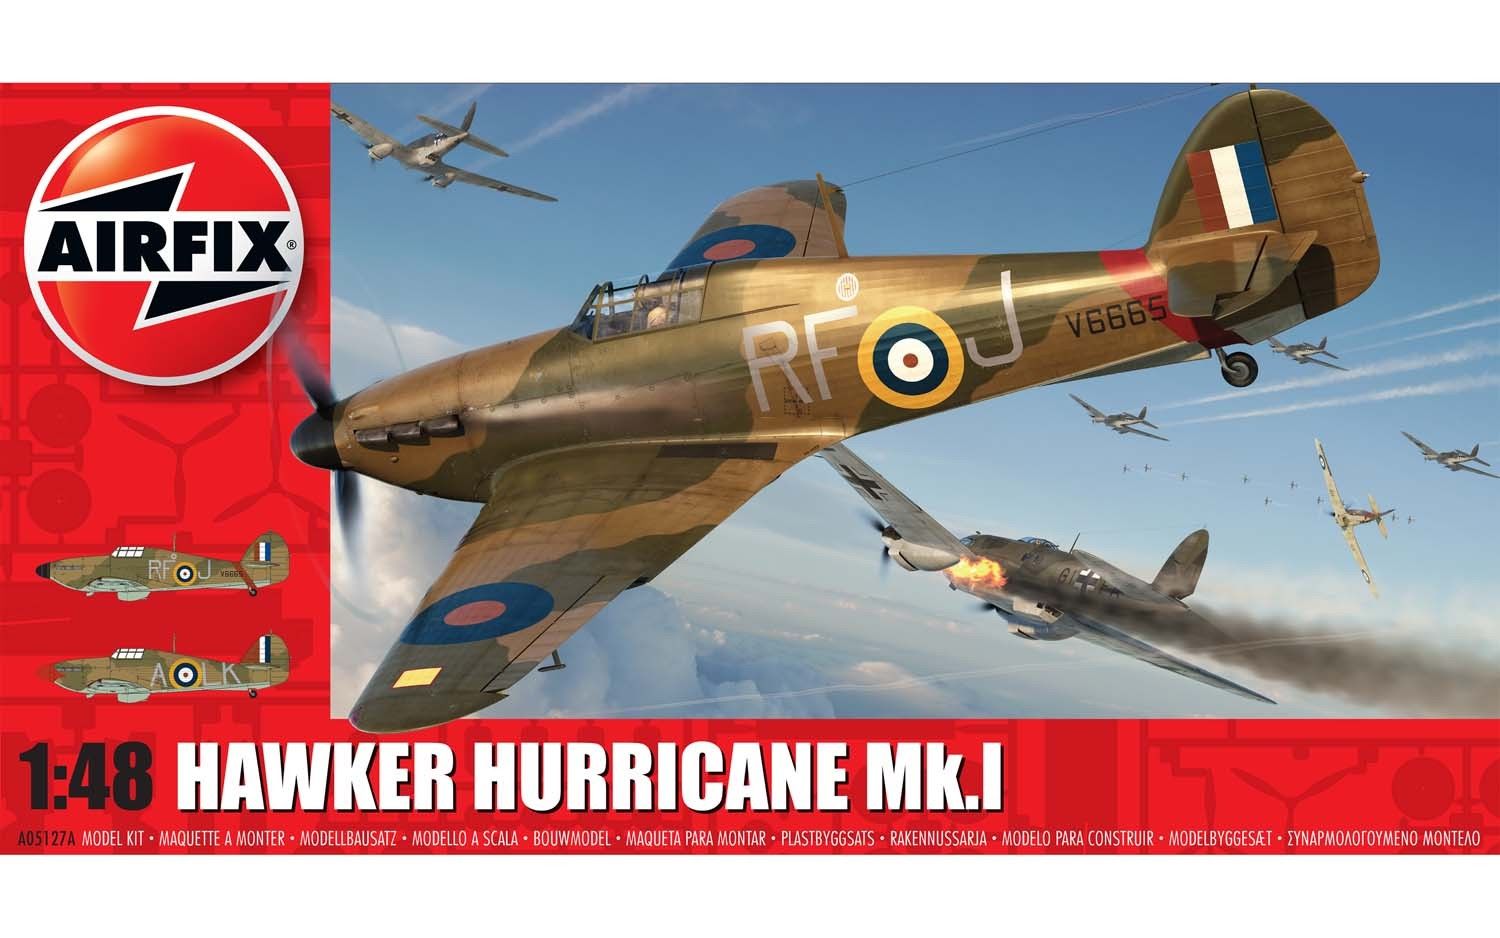 Airfix 1/48 Scale Hawker Hurricane Mx. 1 Model Kit